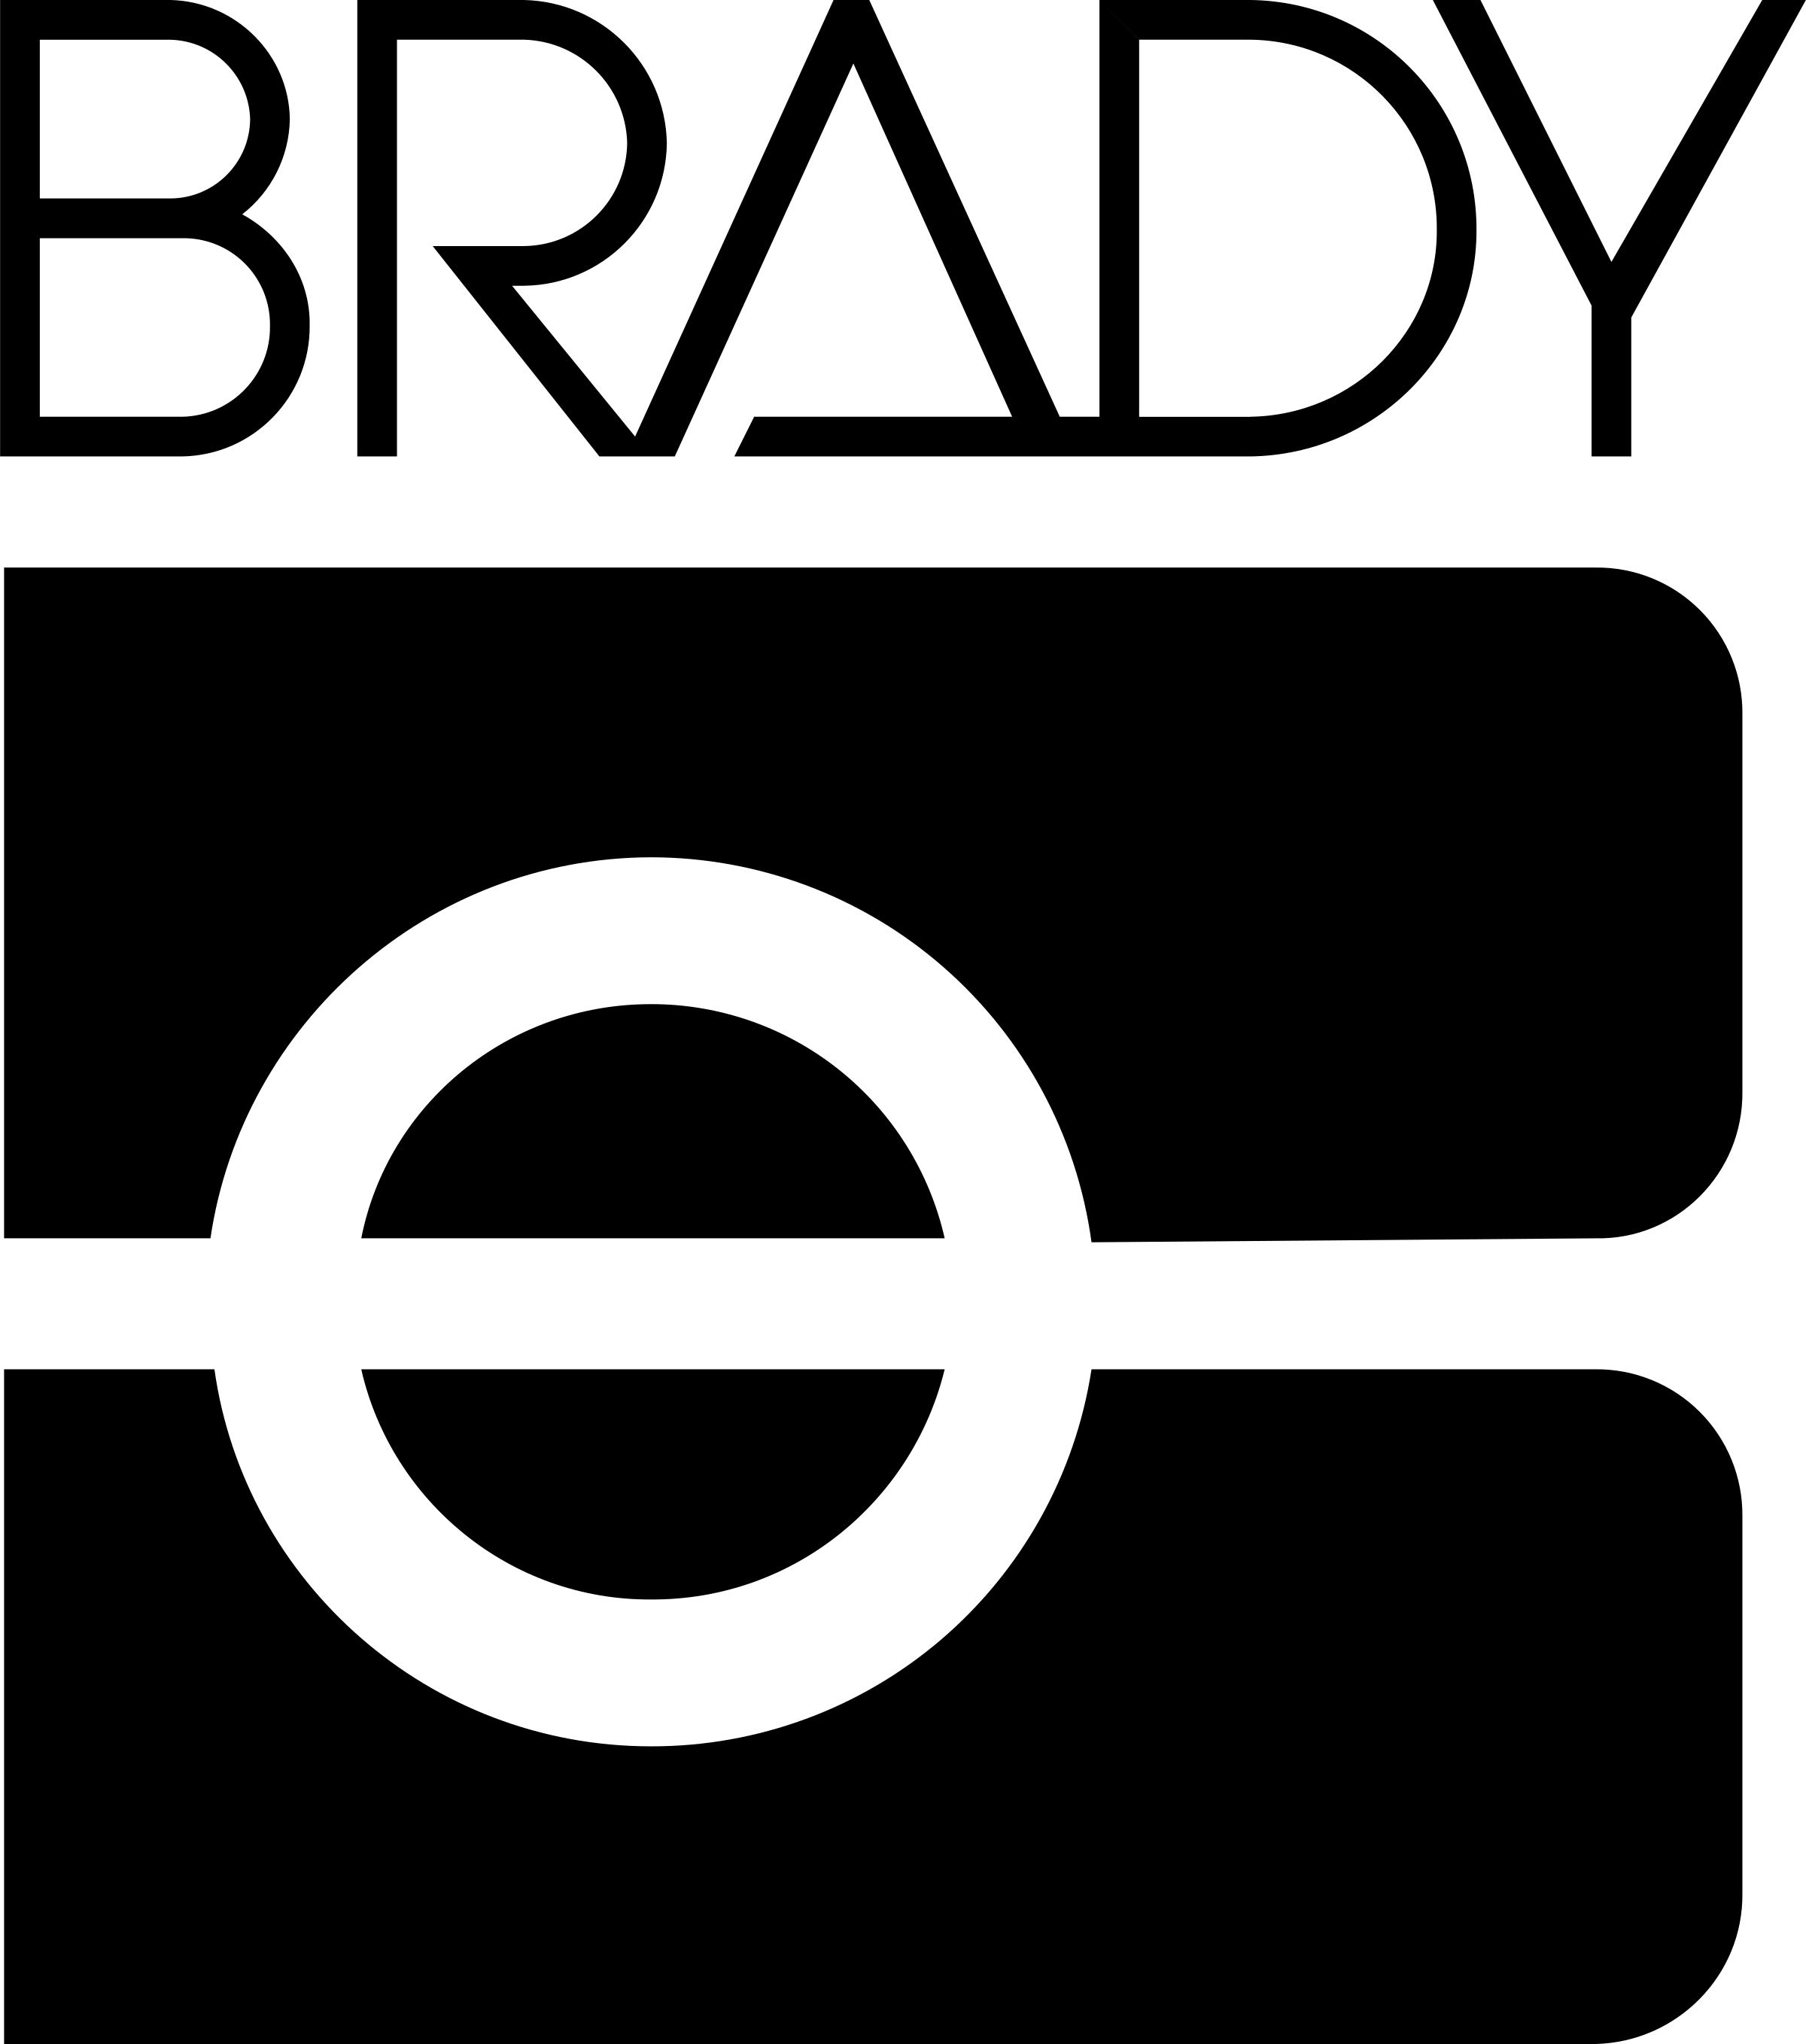 Brady Logo - BRADY Logo PNG Transparent & SVG Vector